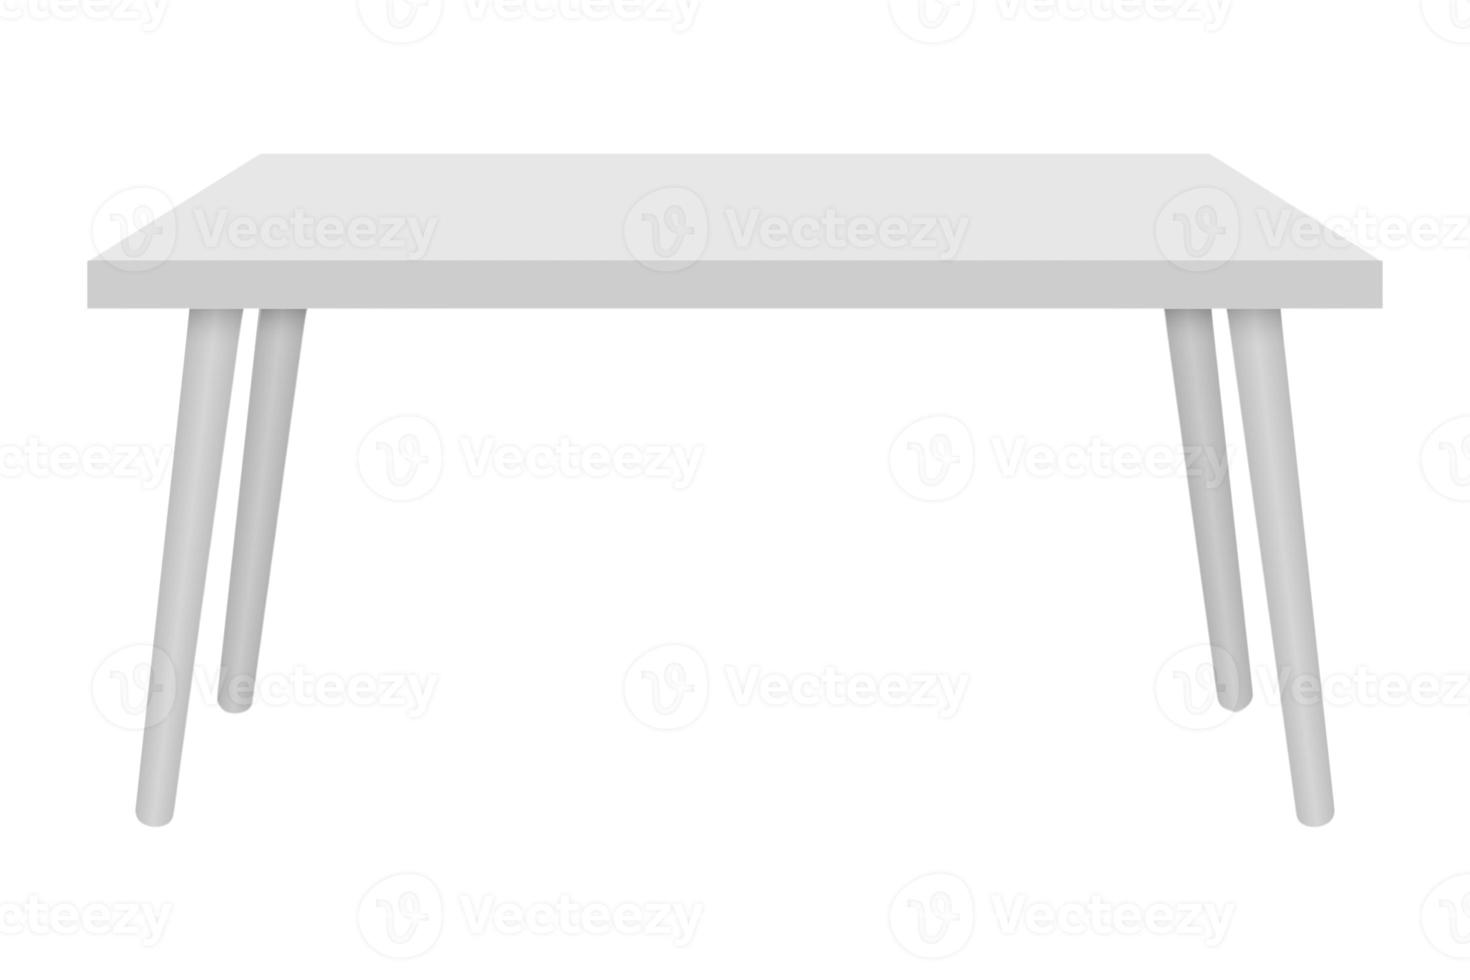 1104 vit tabell isolerat på en transparent bakgrund foto